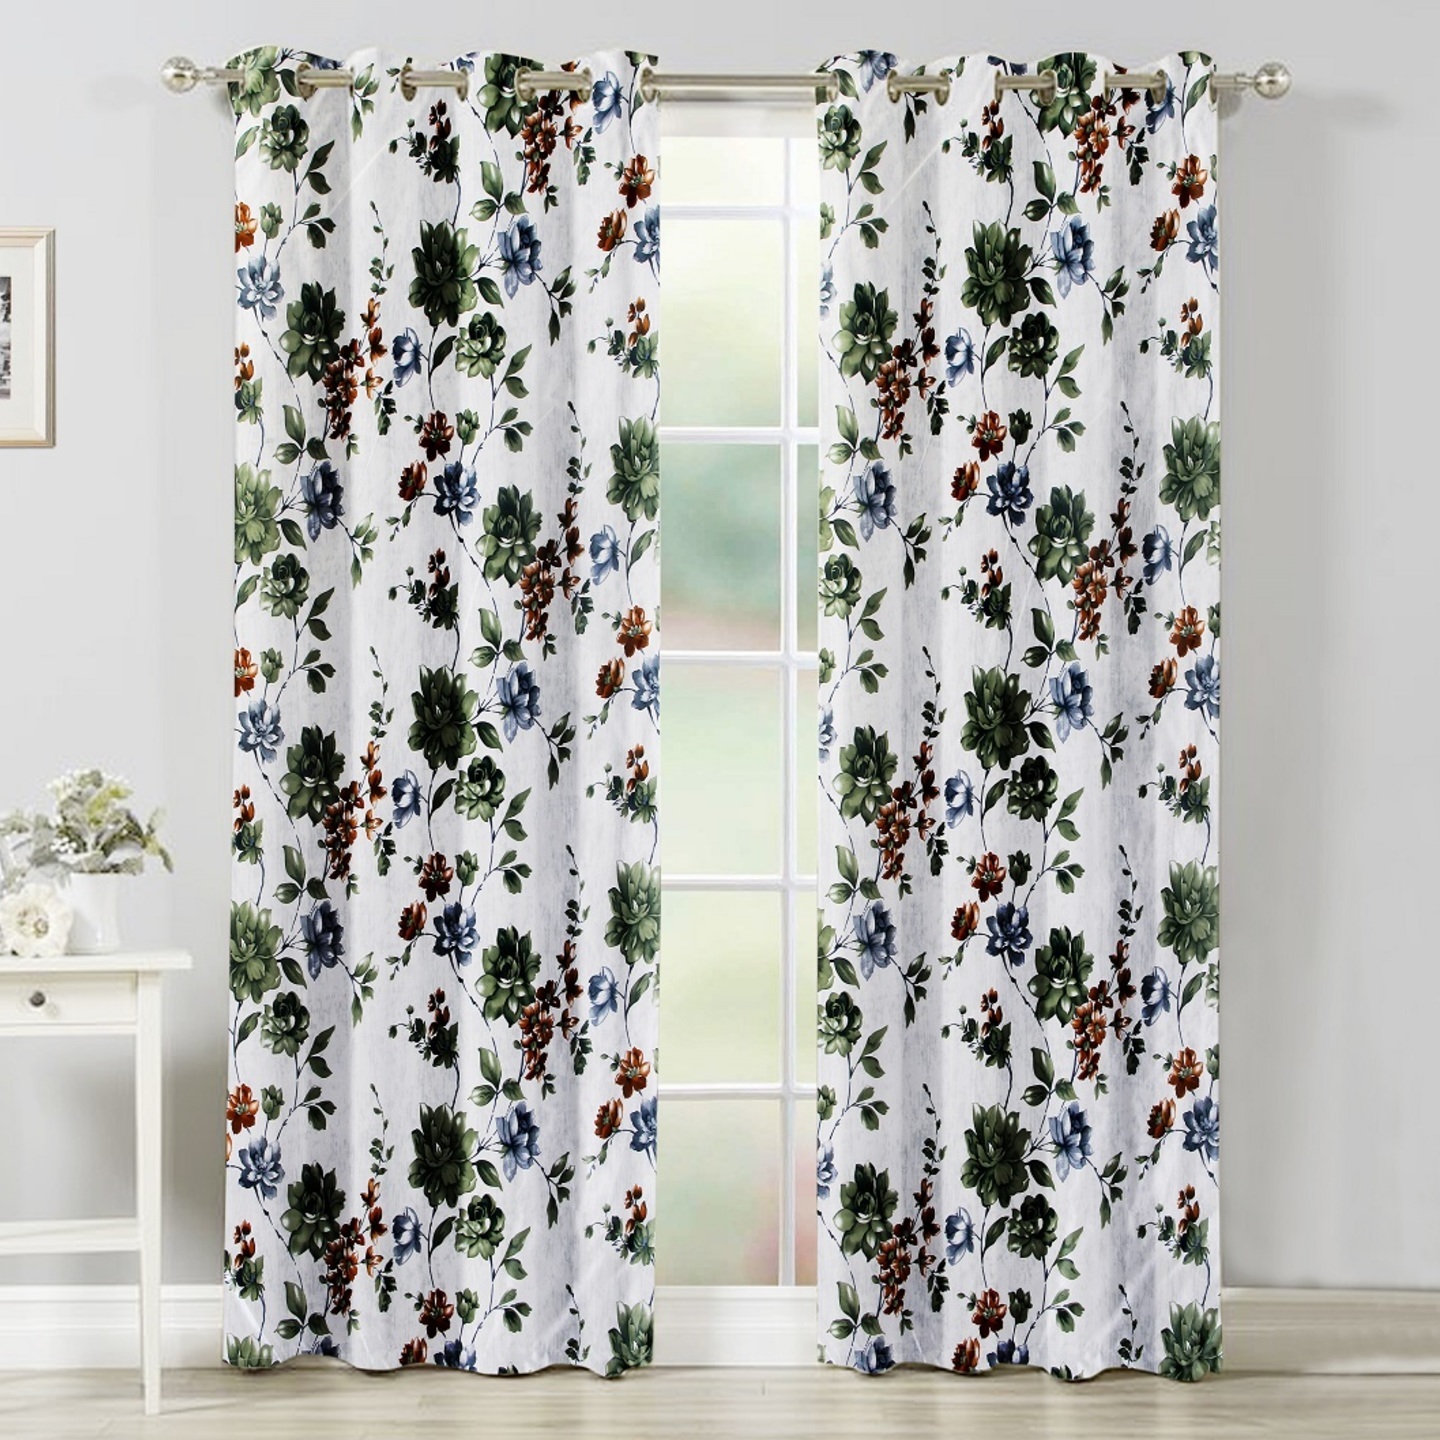 Handtex Home Floral Design Door Curtains 4x7 feet Set of 2 pcs Green